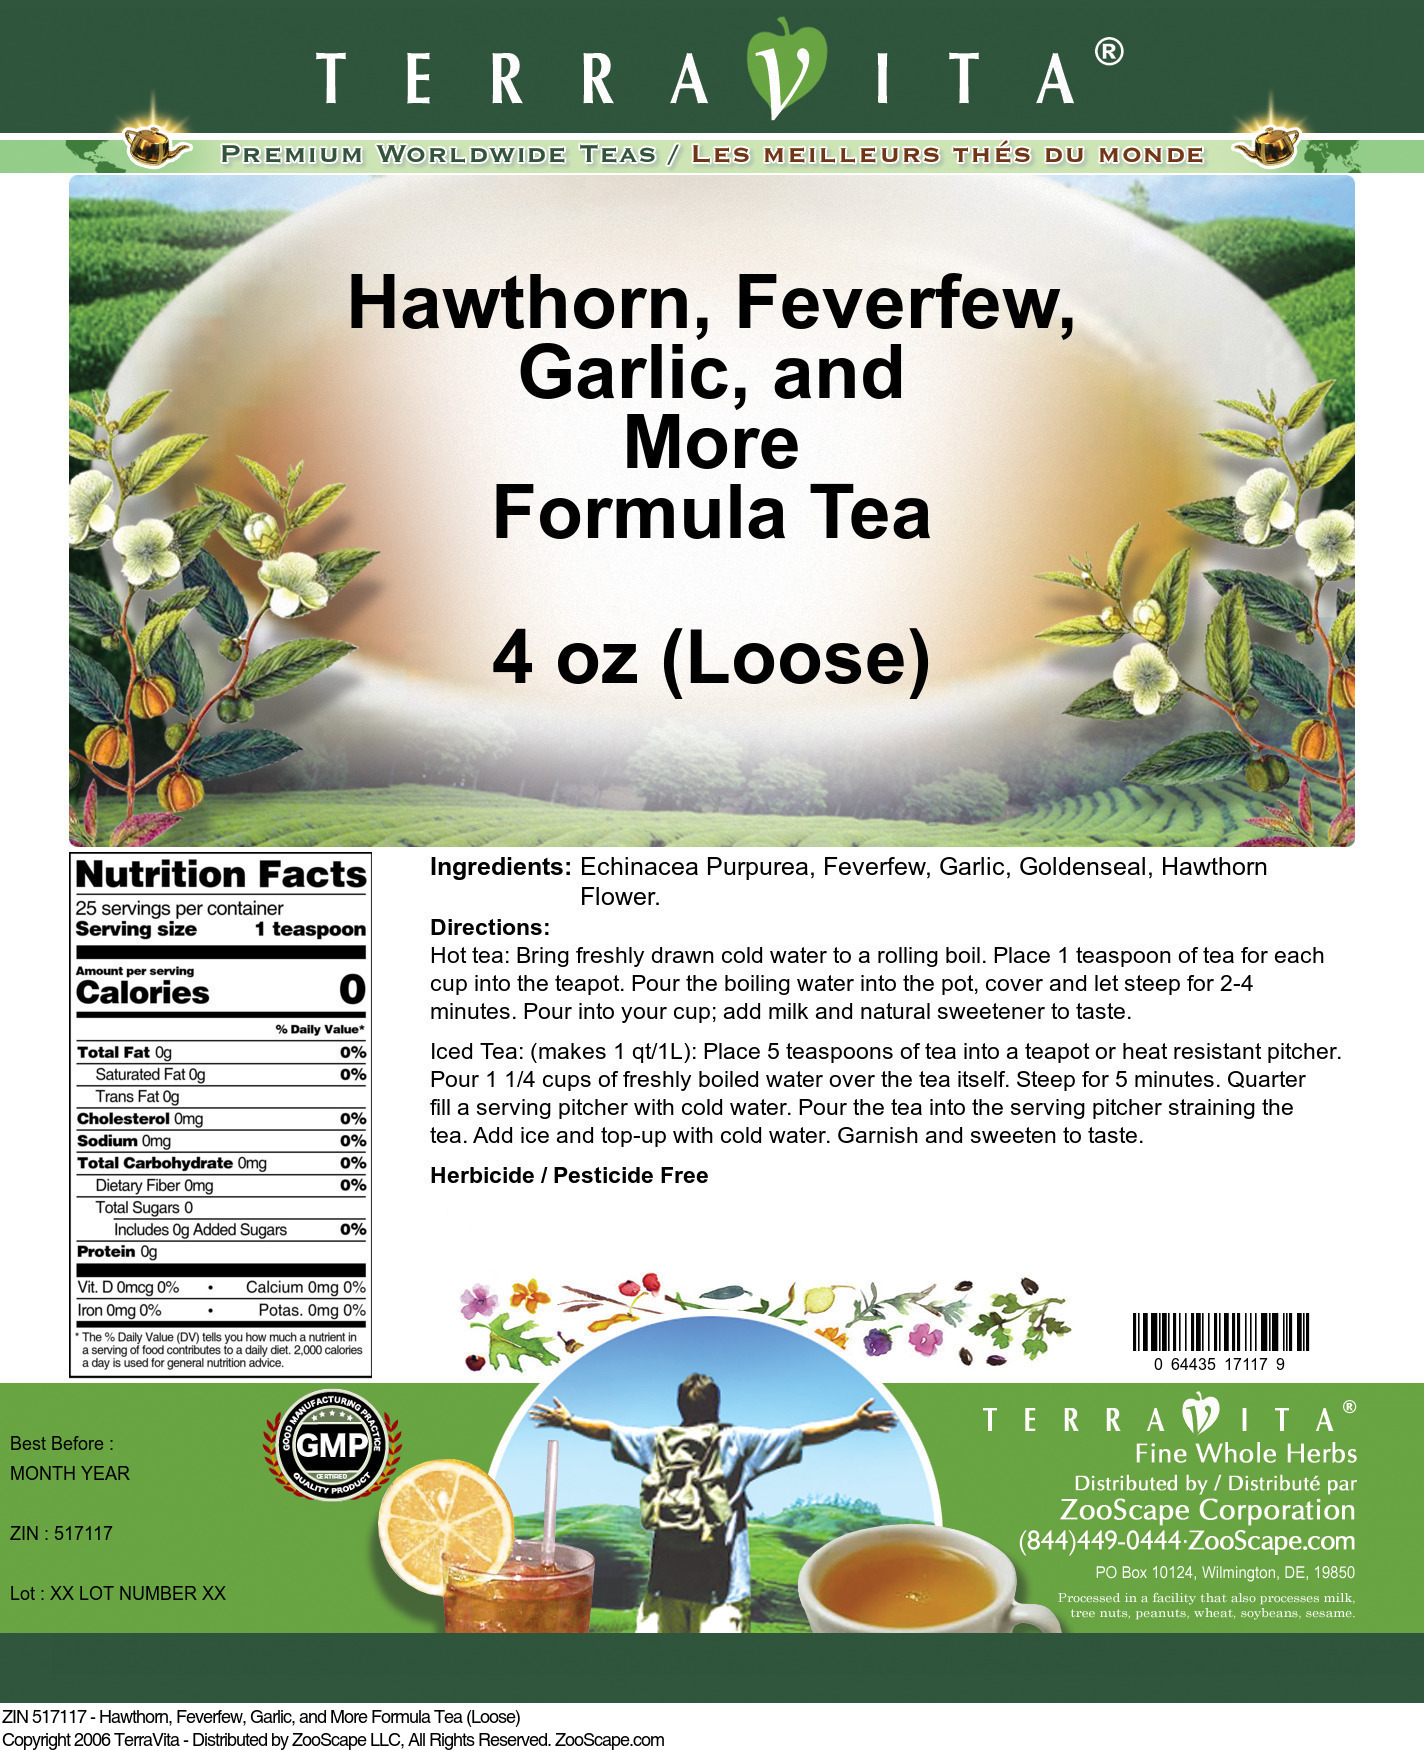 Hawthorn, Feverfew, Garlic, and More Formula Tea (Loose) - Label